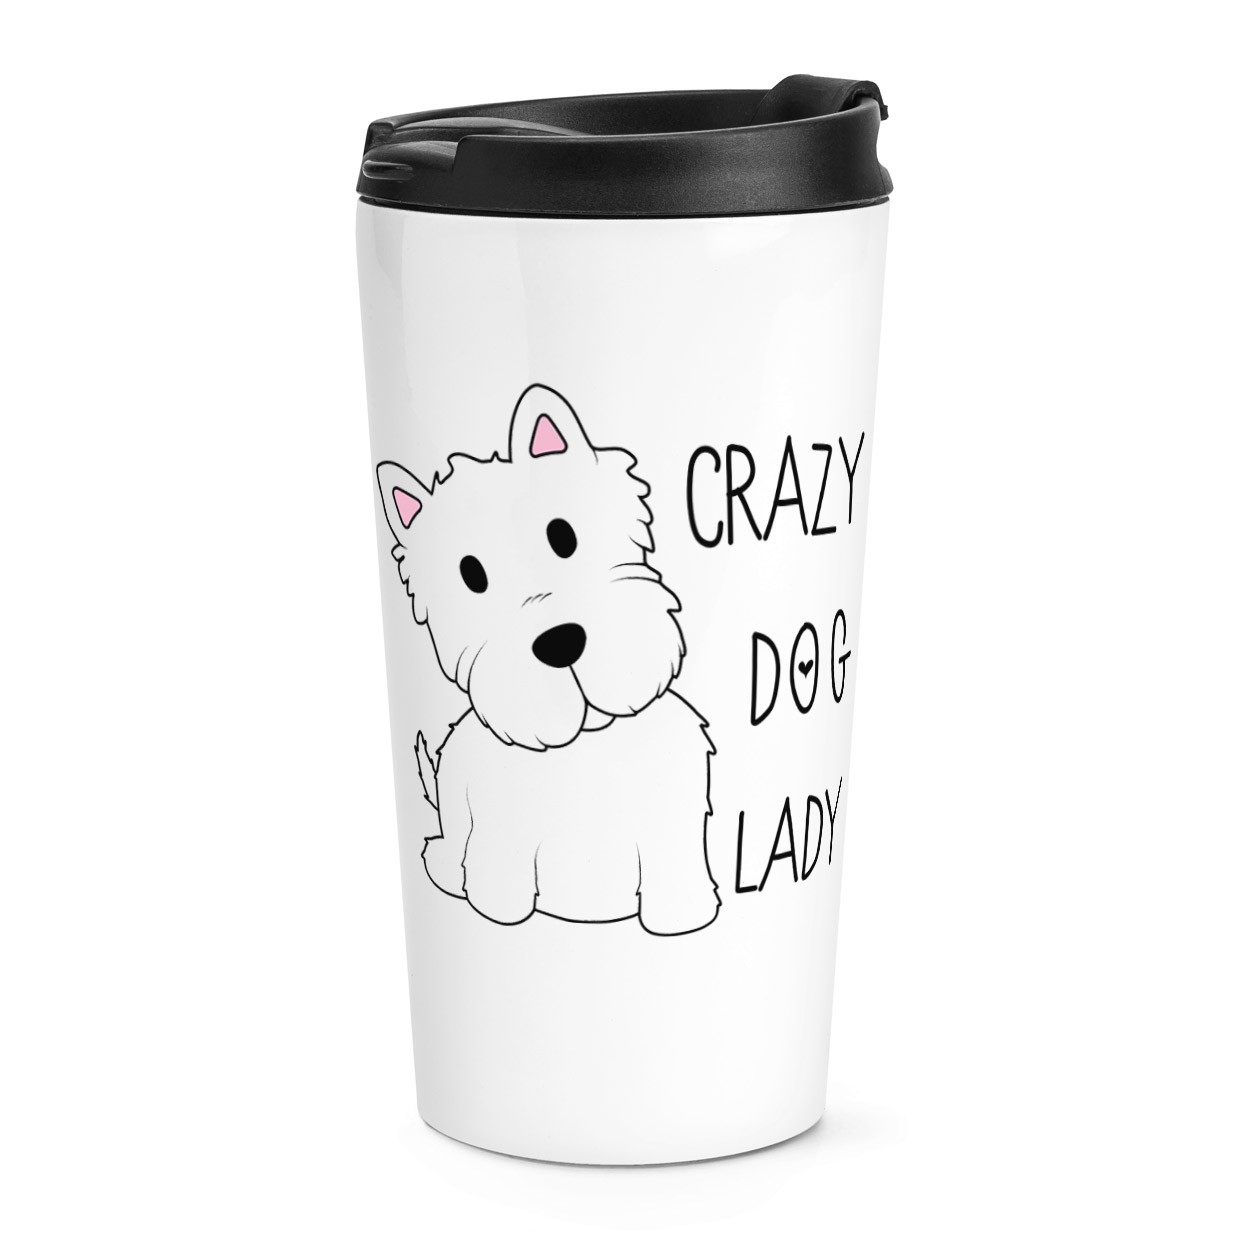 Crazy Dog Lady Travel Mug Cup